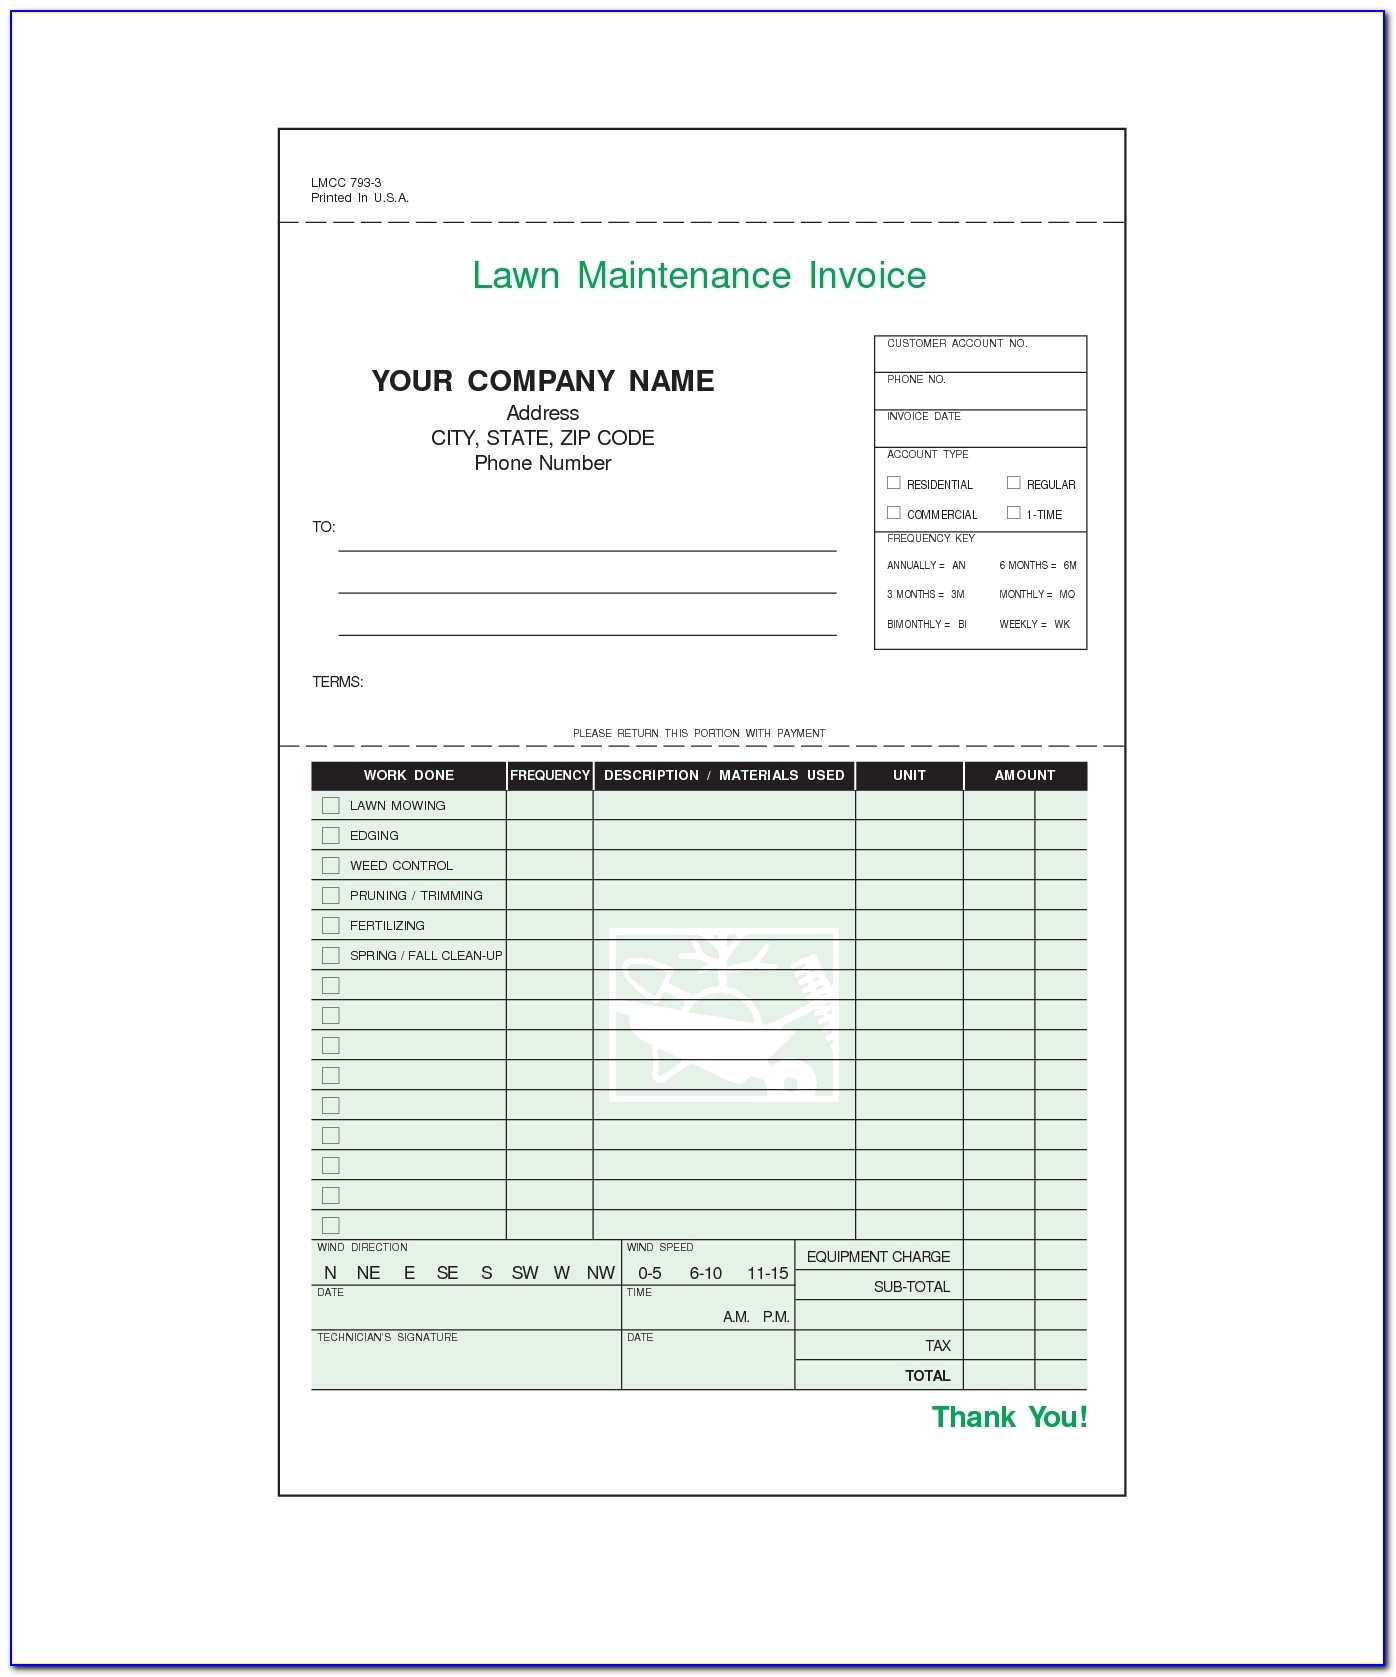 Lawn Care Invoices Invoice Template Free 2016 Lawn Maintenance Invoice